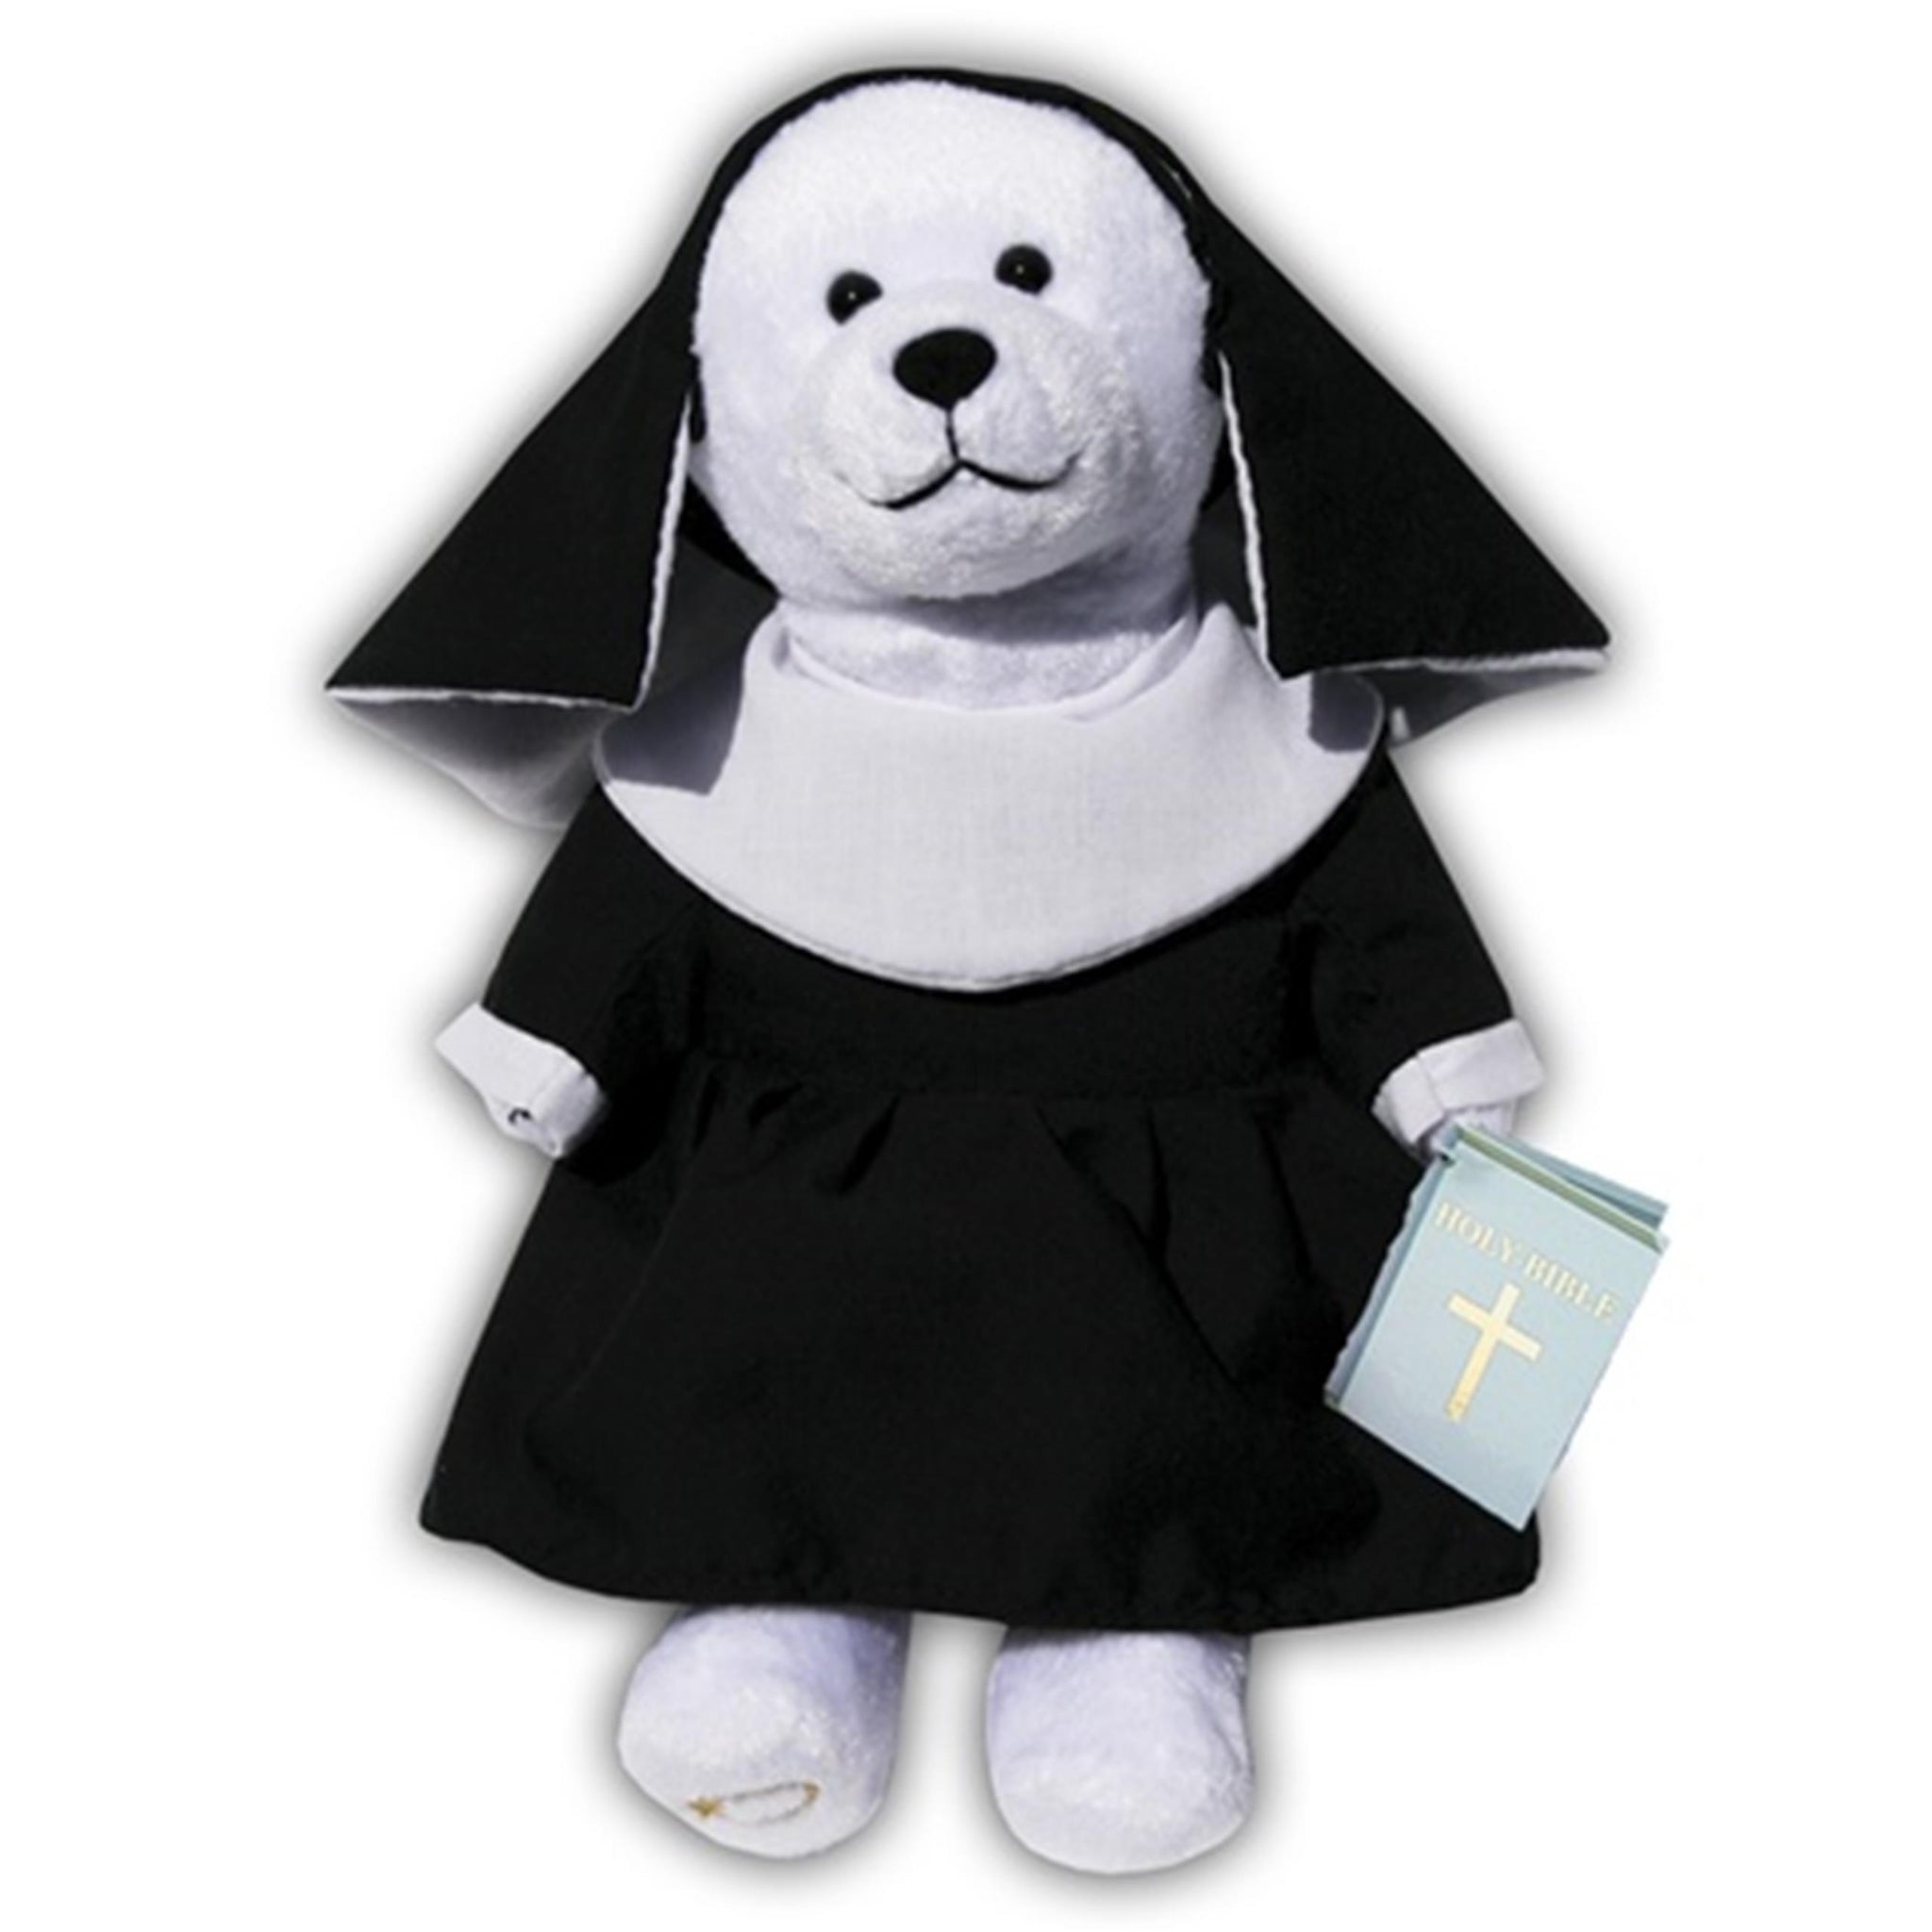 Nun (Pray for Vocations) - HolyBears Plush